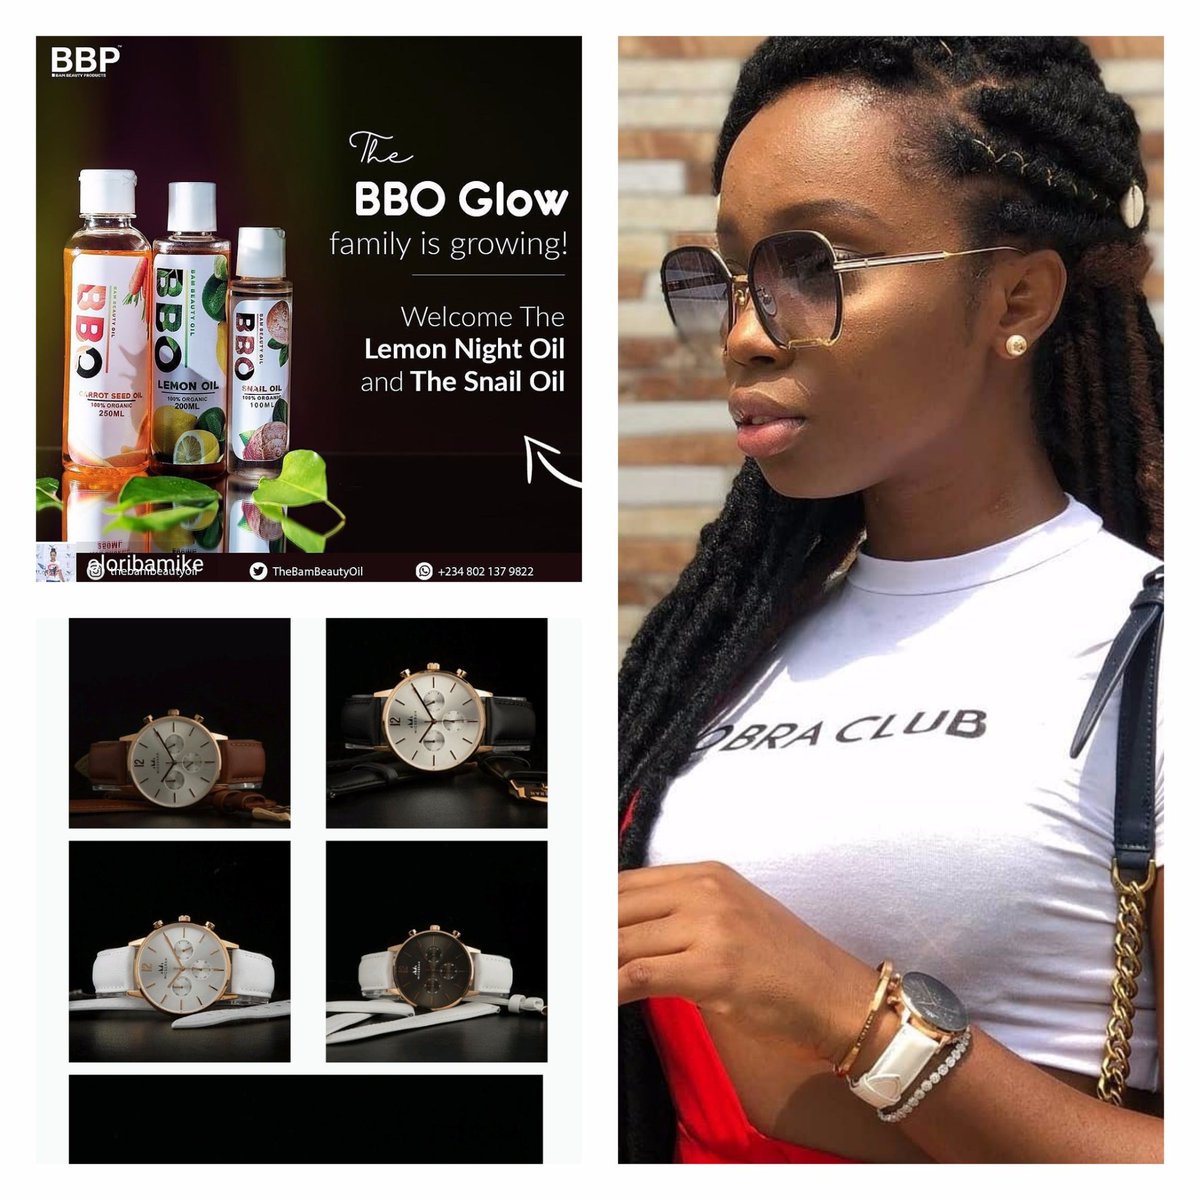 BBO (Organic and Multi Purpose Oil Available on Jumia)👌Let Us Help You Check Time With Micserah Wristwatch Just visit👇
micserah.com/bambamluna
#WednesdayMotivation #DINO #morningdrivelagos #BamBamLuna #BamBeautyProducts #OrganicProductsinNigeria #OrganicOils #watches #Ghana